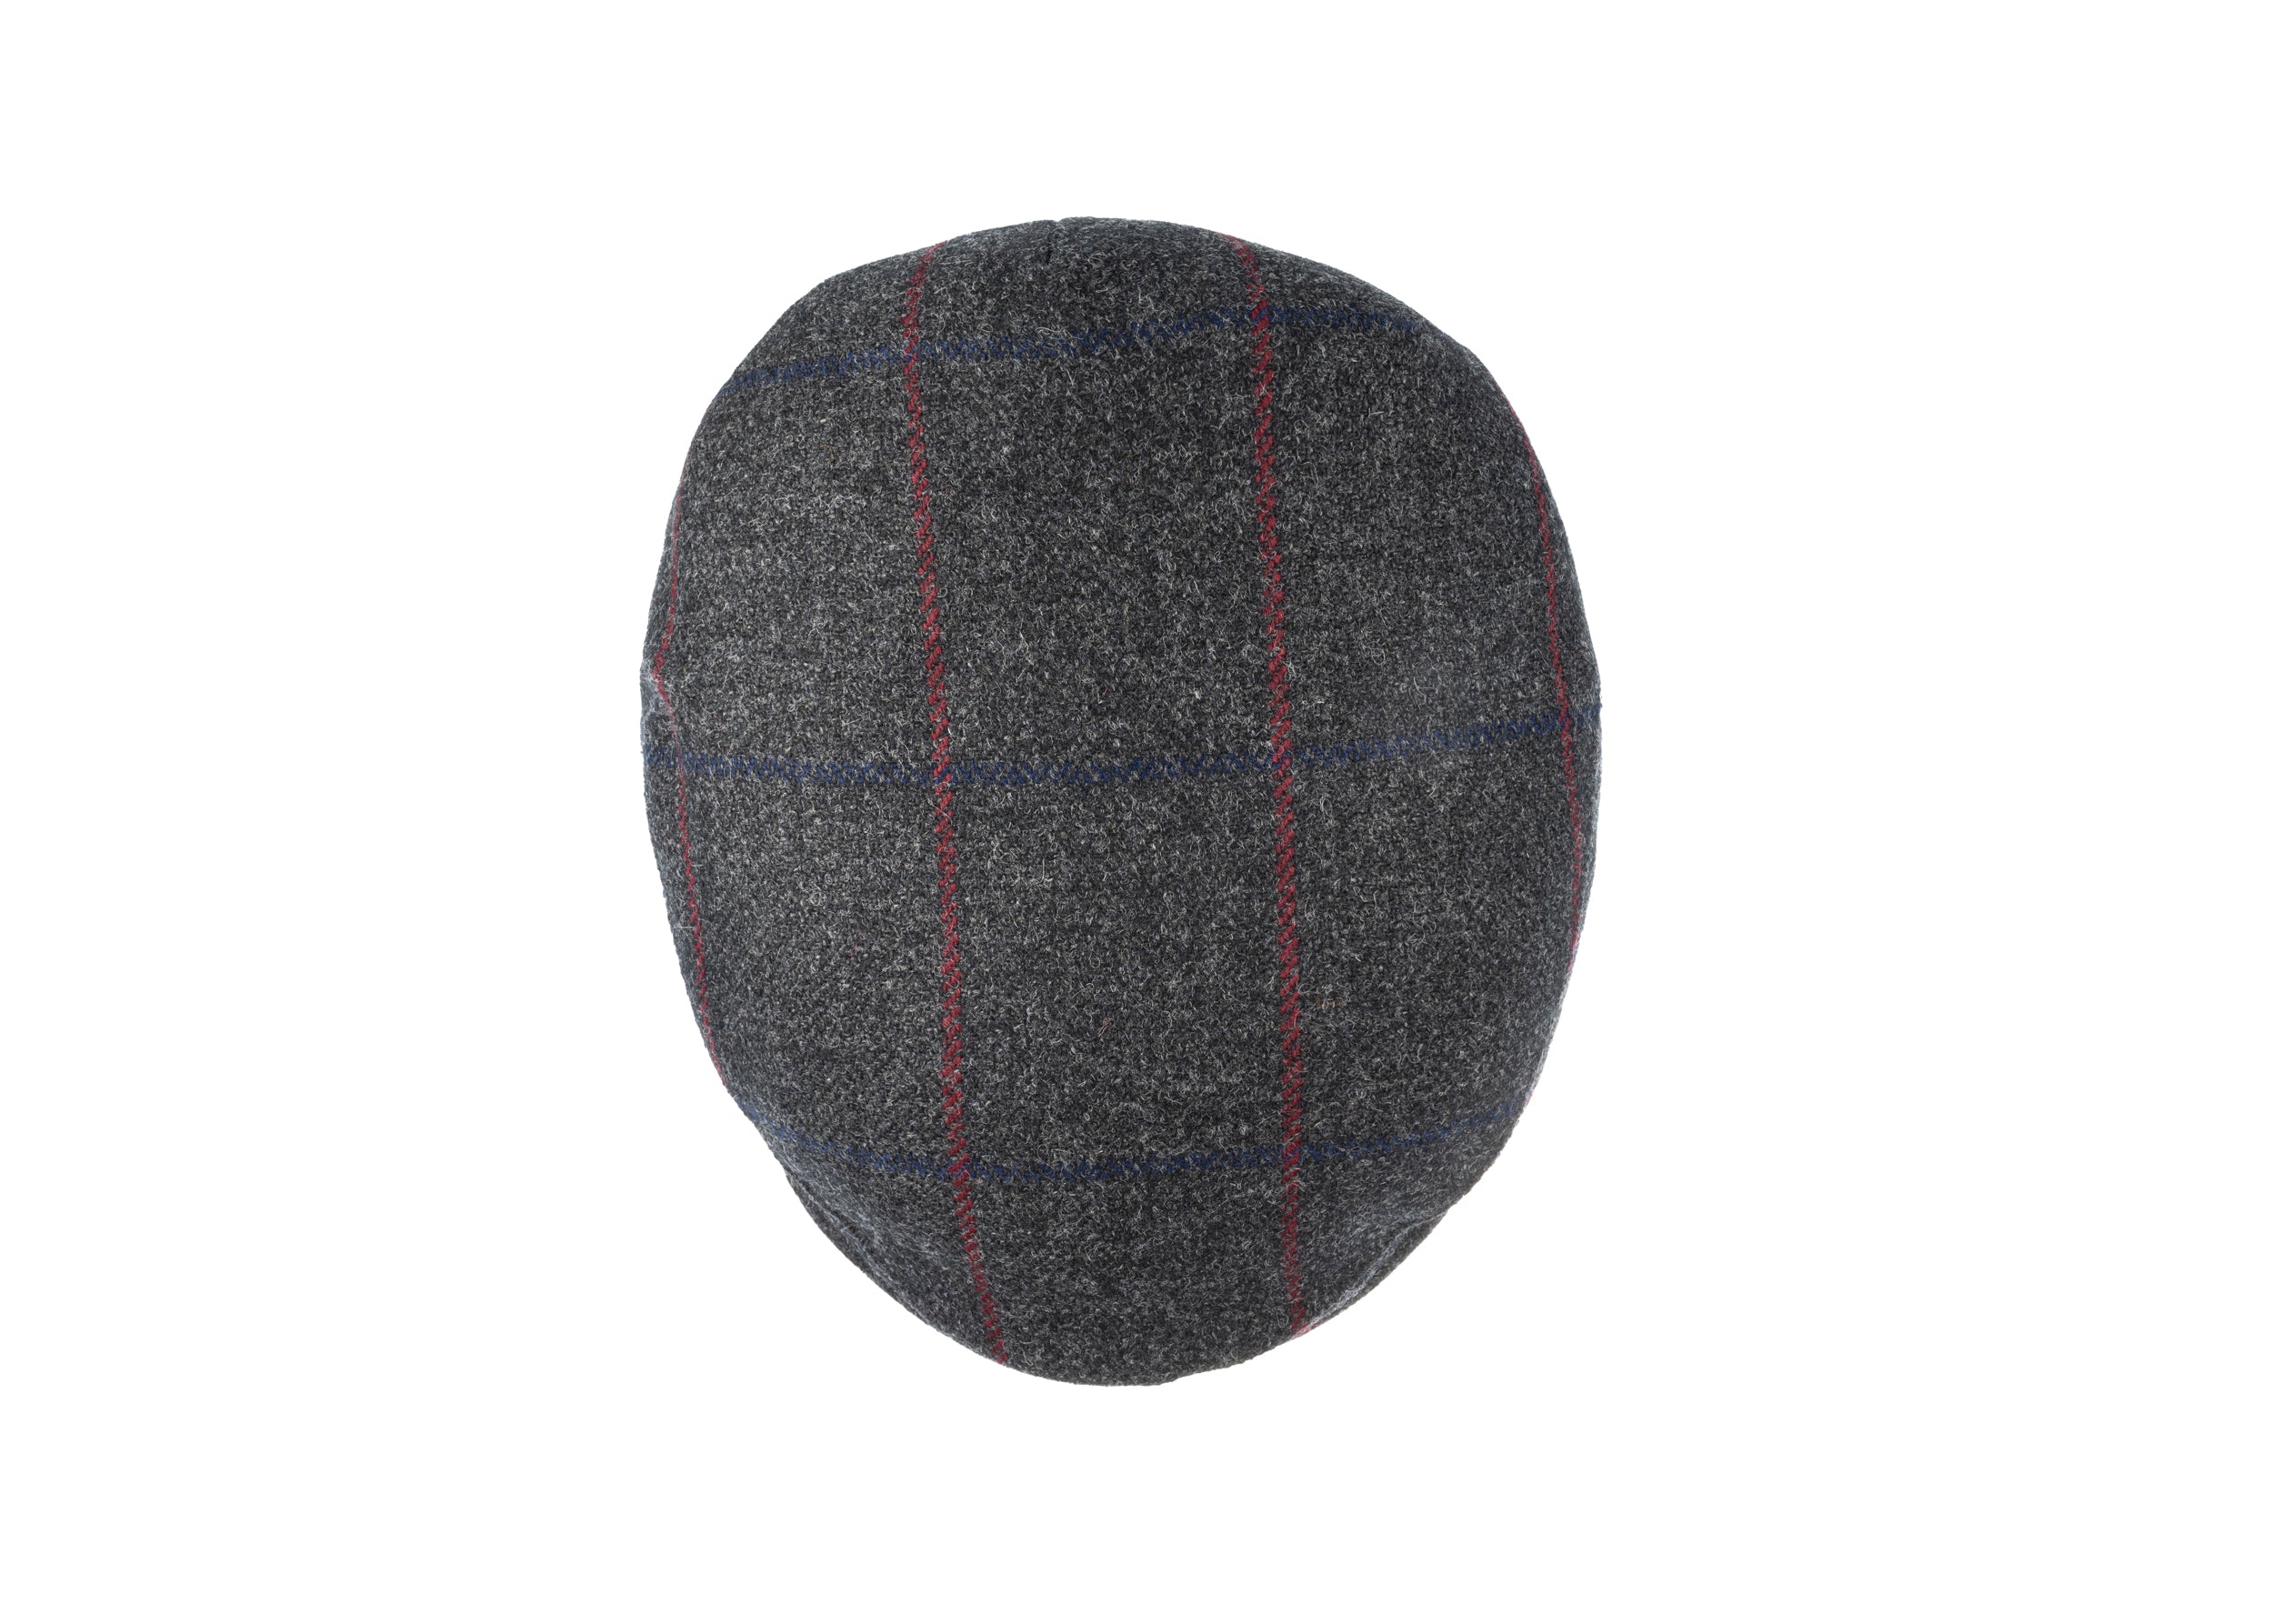 Balmoral Tweed Flat Cap in Z538